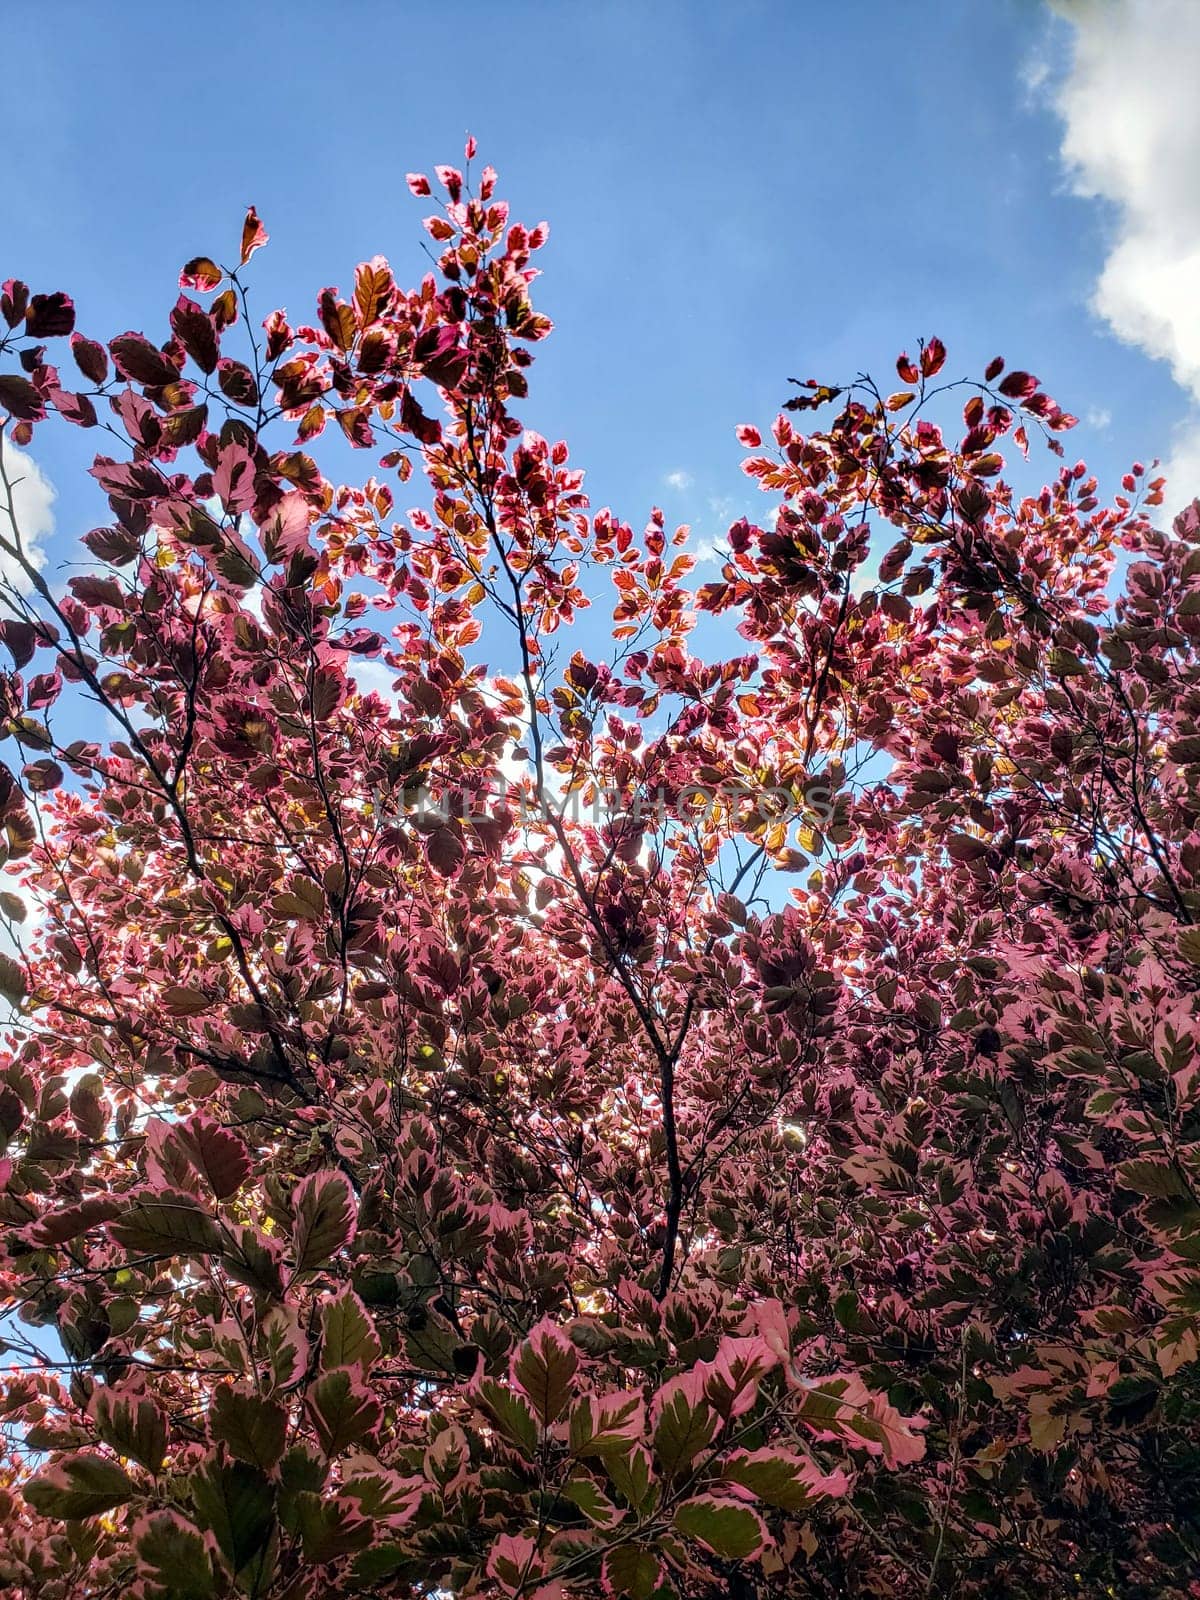 Tricolor Beech Tree (Fagus sylvatica) Seen During a Sunny Day